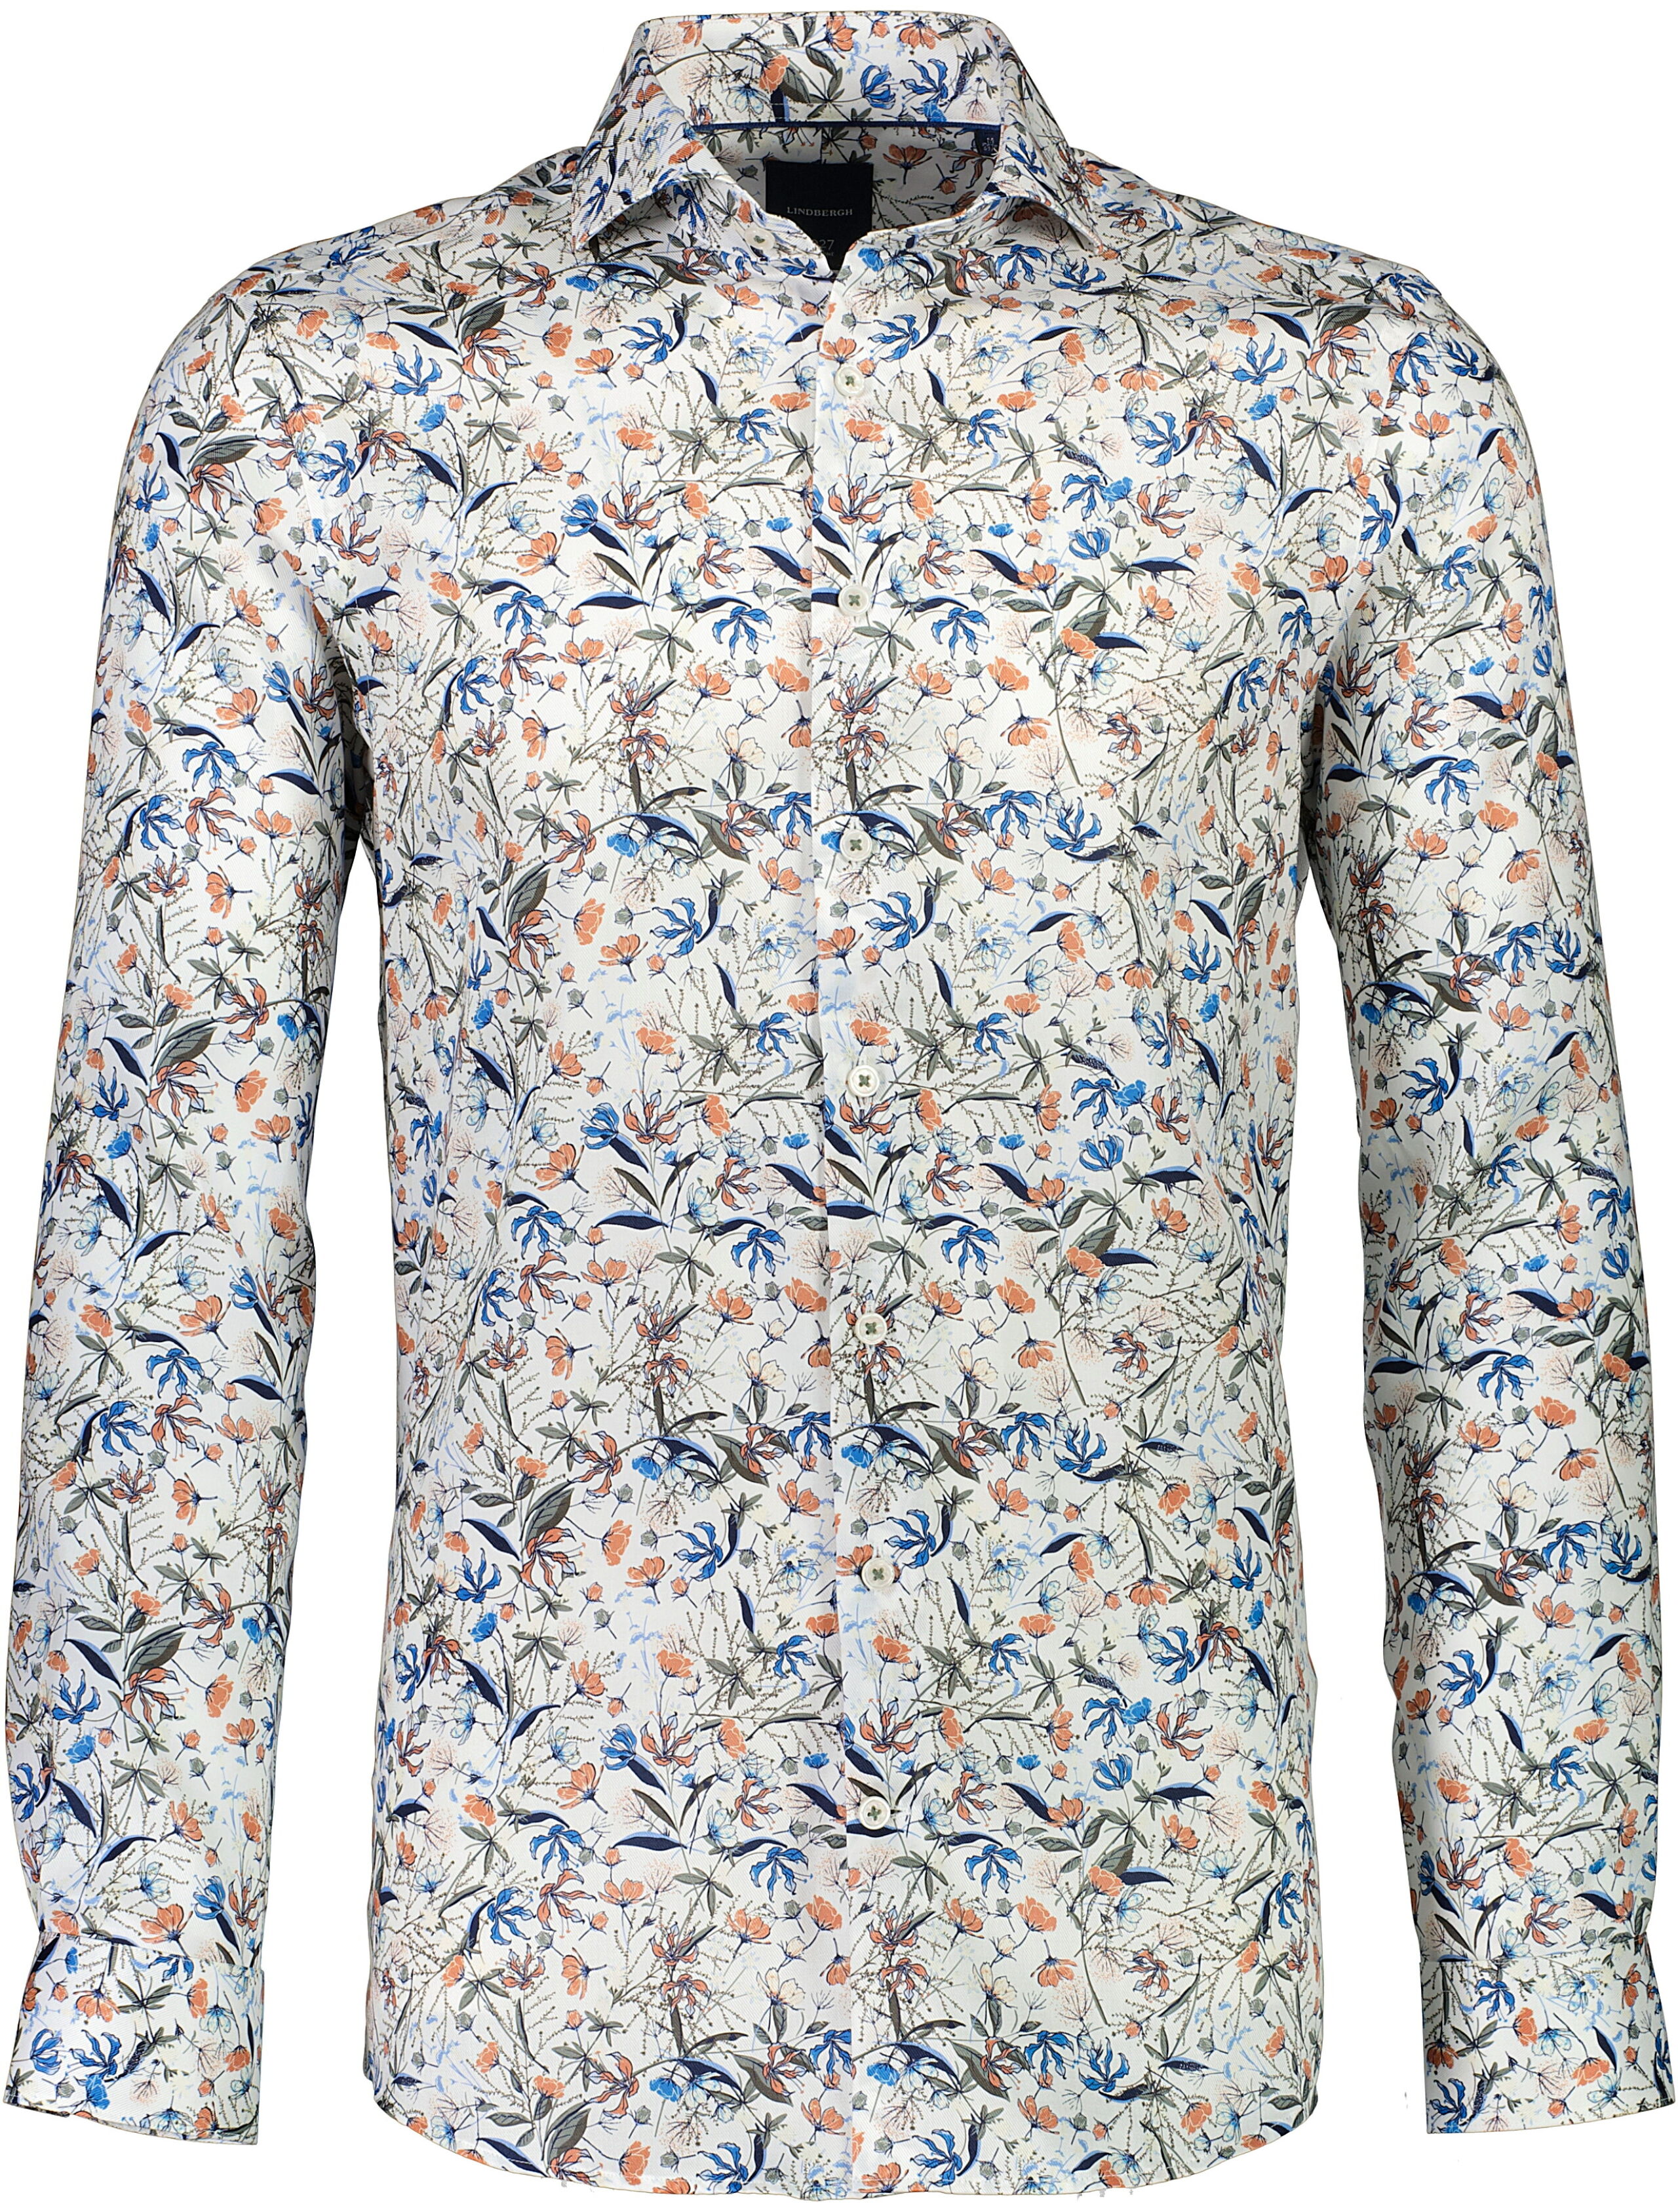 1927 Business casual shirt 30-247166